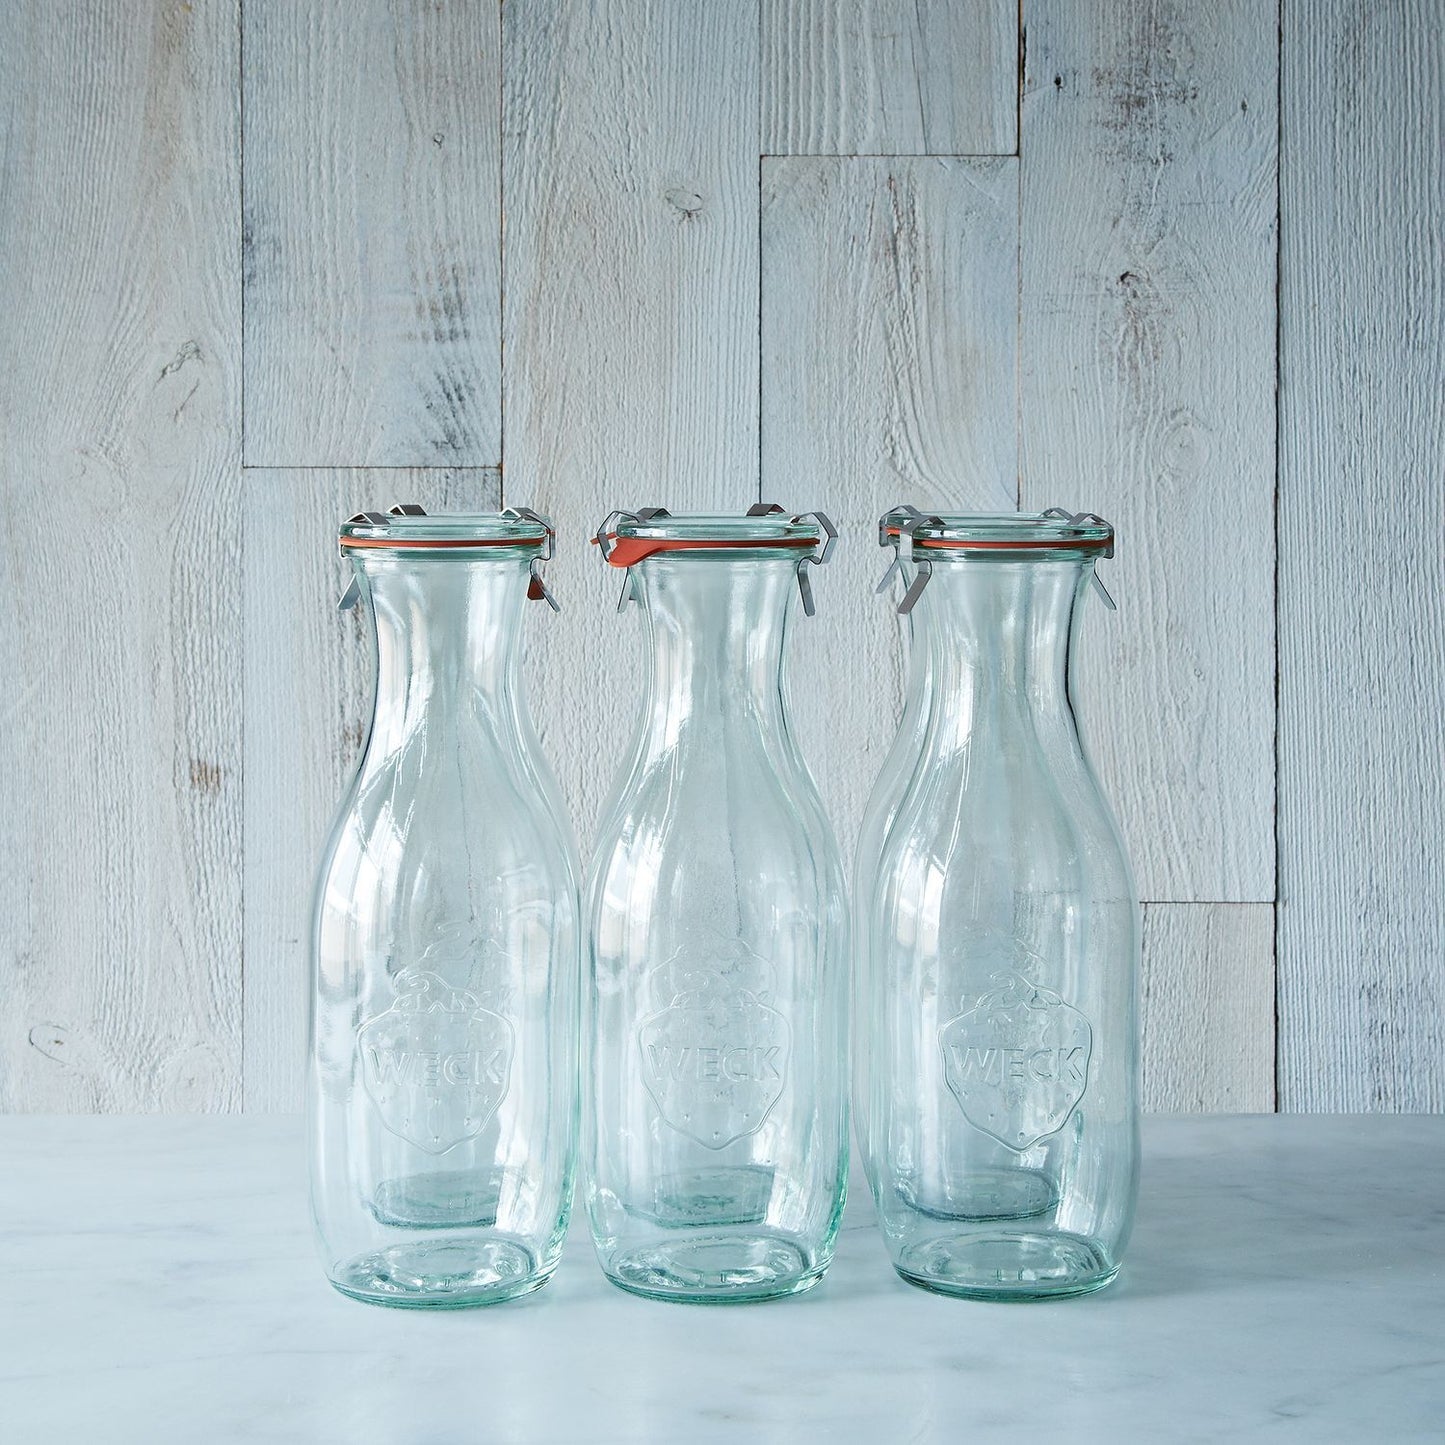 Weck Juice Jar - (2) 764 1/2-Liter jar with Rubber Rings, Steel Clamps,  Glass Lids, & Keep Fresh Lids